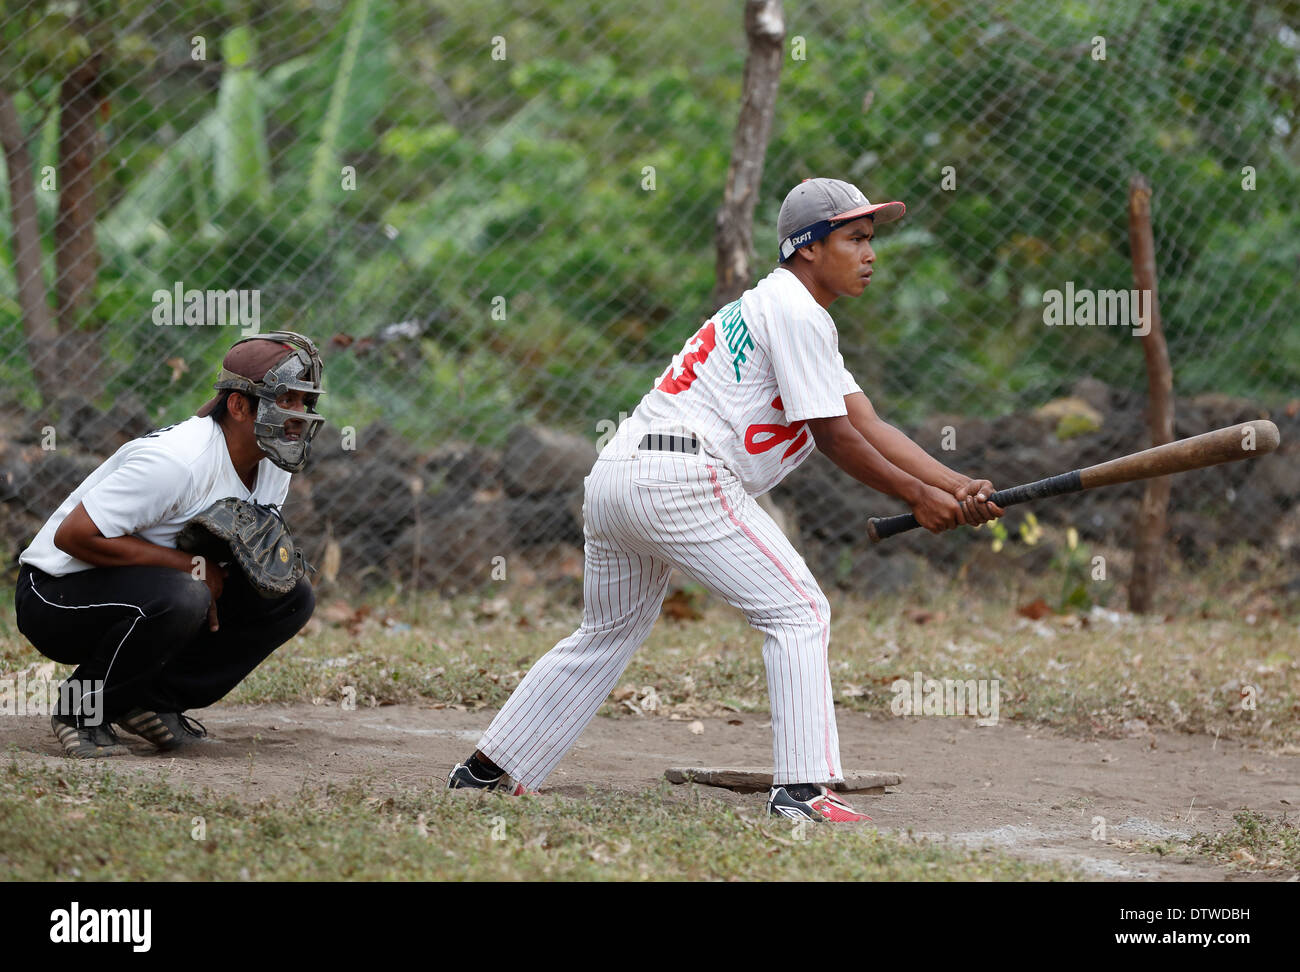 Batter and catcher, village baseball game, Ometepe Island, Nicaragua Stock Photo